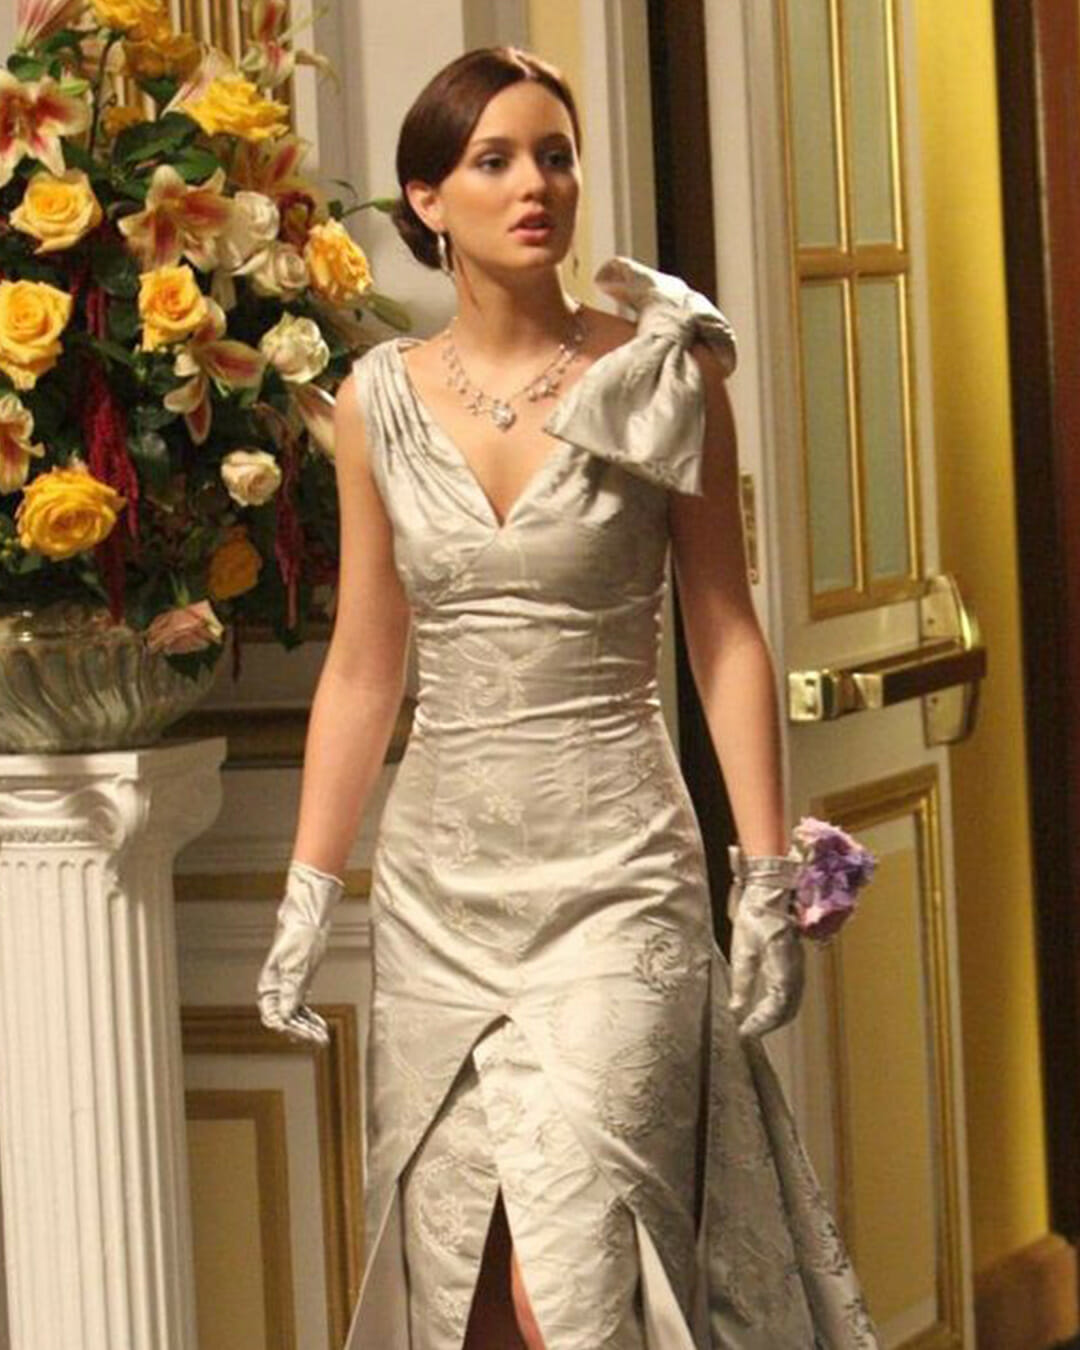 Leighton Meester as Blair Waldorf wearing diamonds